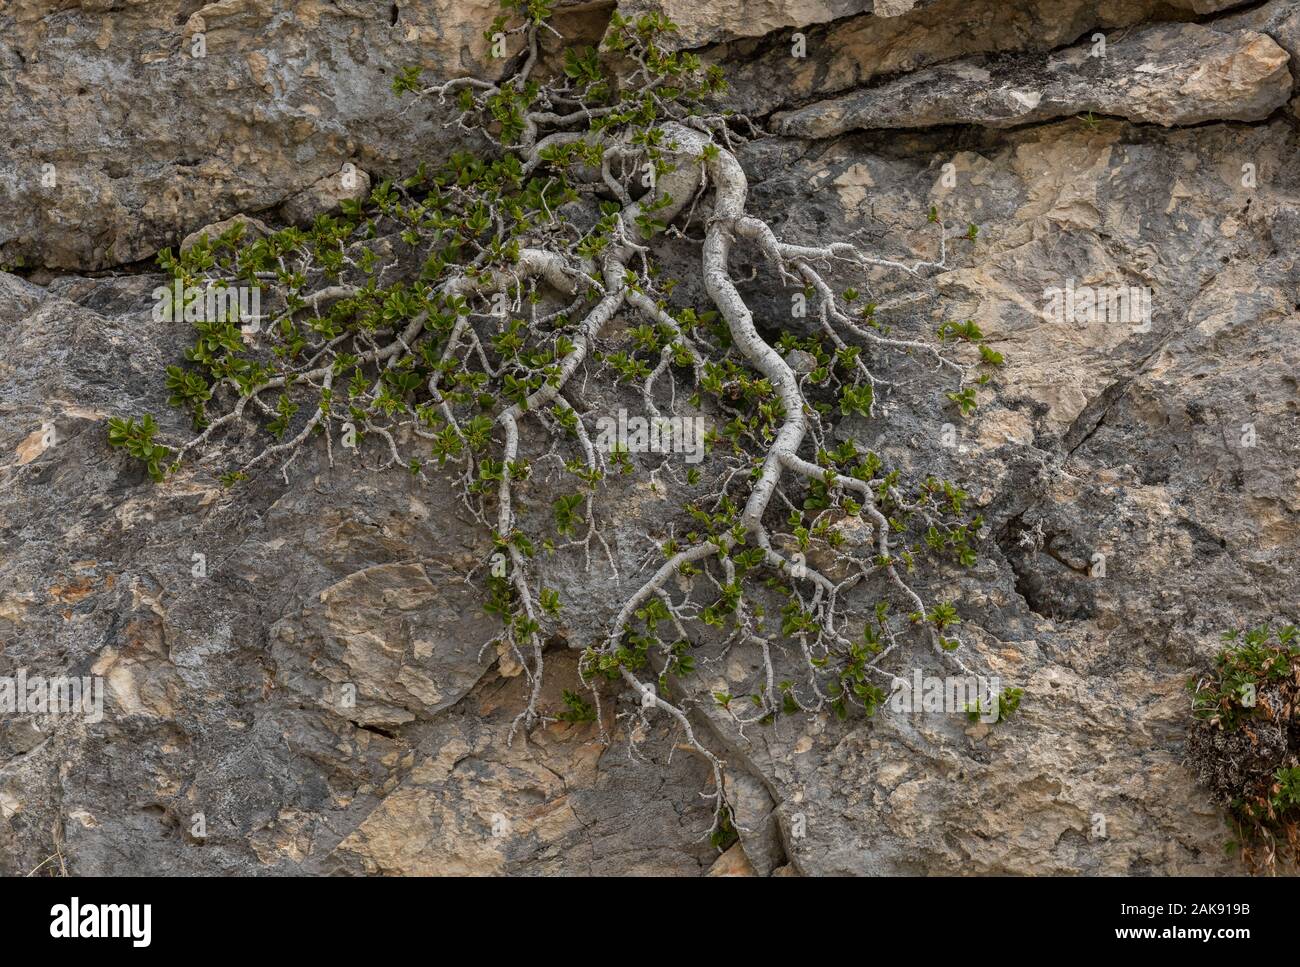 Dwarf buckthorn, Rhamnus pumila; prostrate bush in flower and fruit, on limestone rock. Maritime Alps. Stock Photo